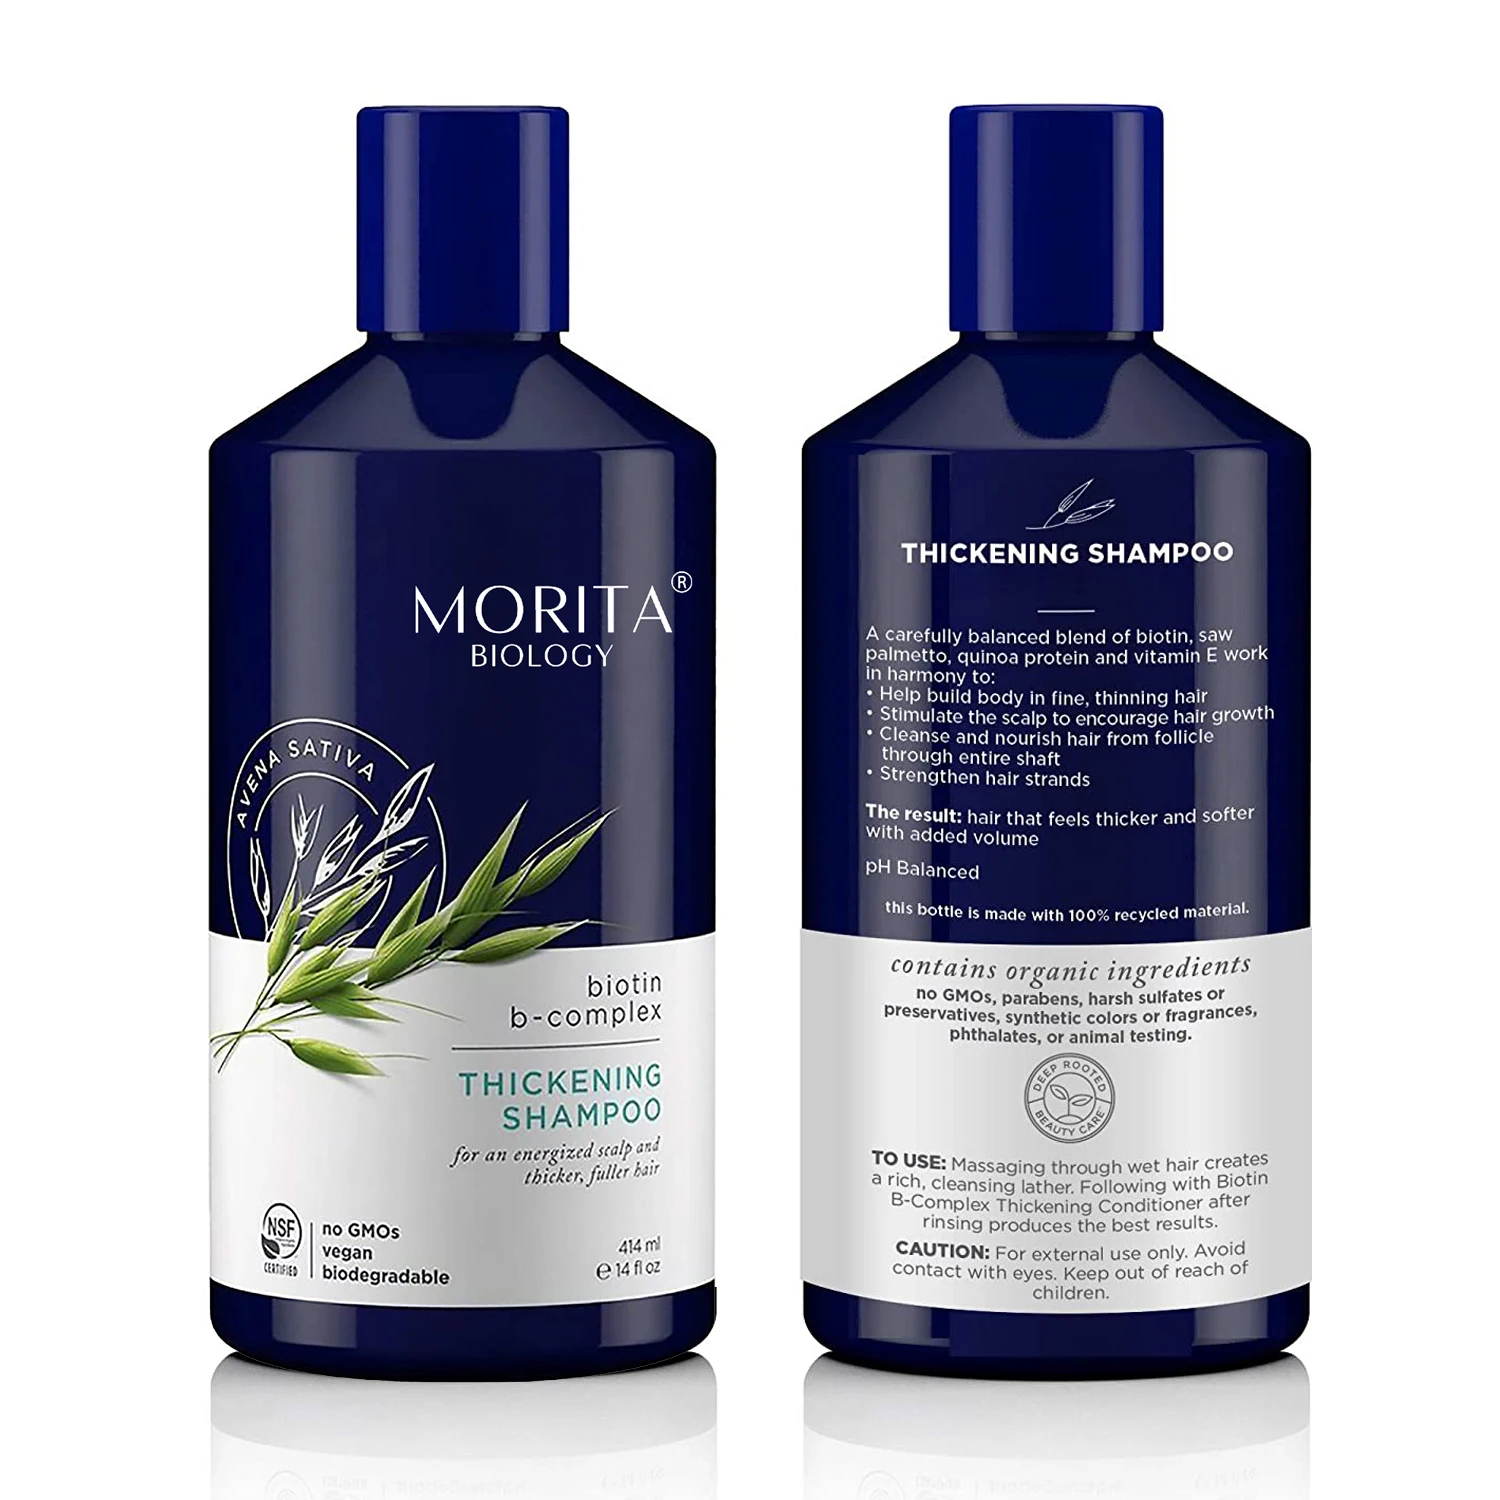 

Wholesale Biotin B - Complex Avena Sativa Thickening Shampoo Natural Moroccan Argan Oil Hair Loss Shampoo and Conditioner